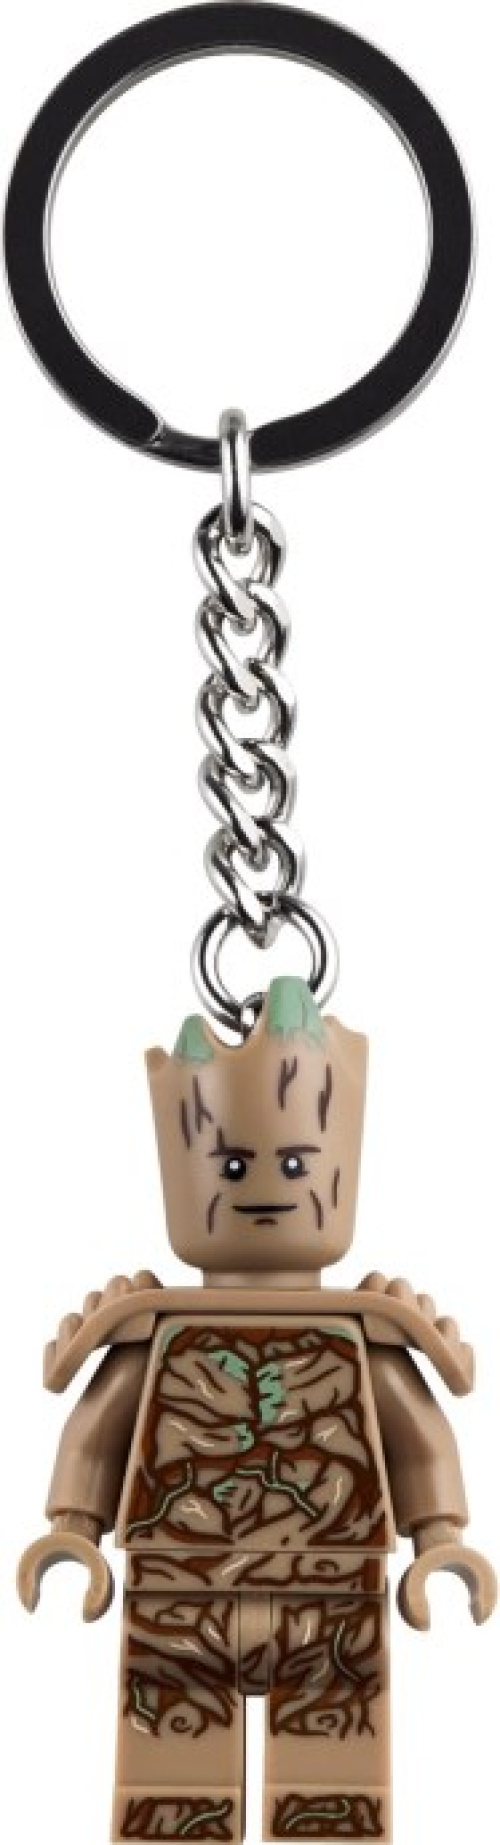 854291-1 Groot Key Chain